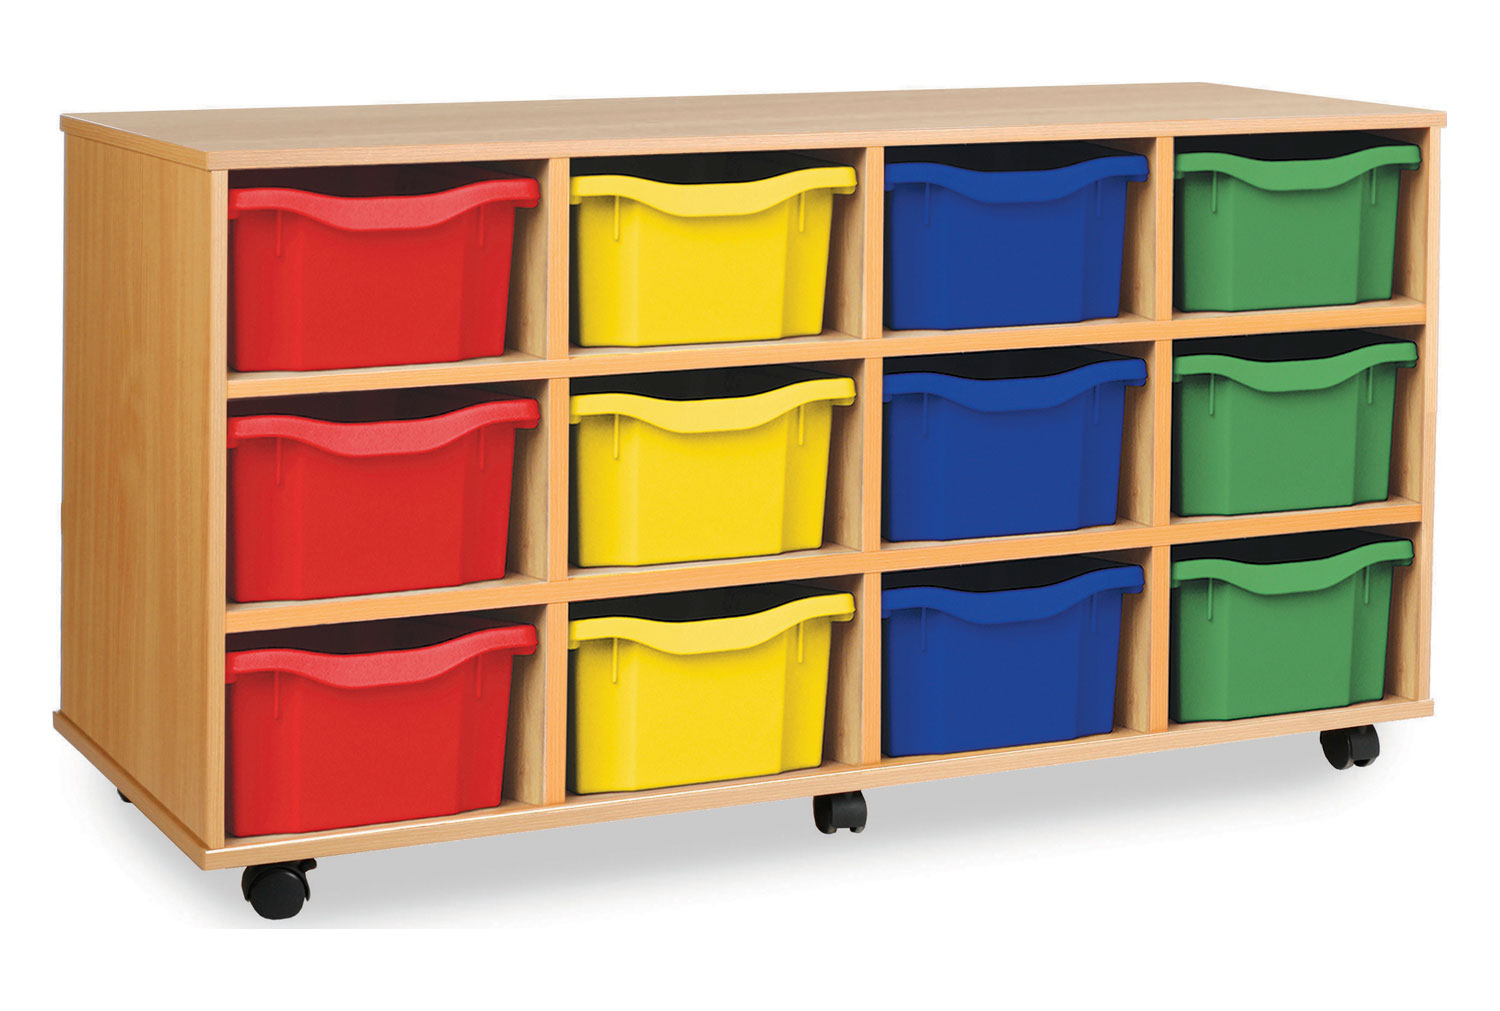 12 Deep Classroom Tray Storage Unit, Red/Blue/Green/Yellow Classroom Trays